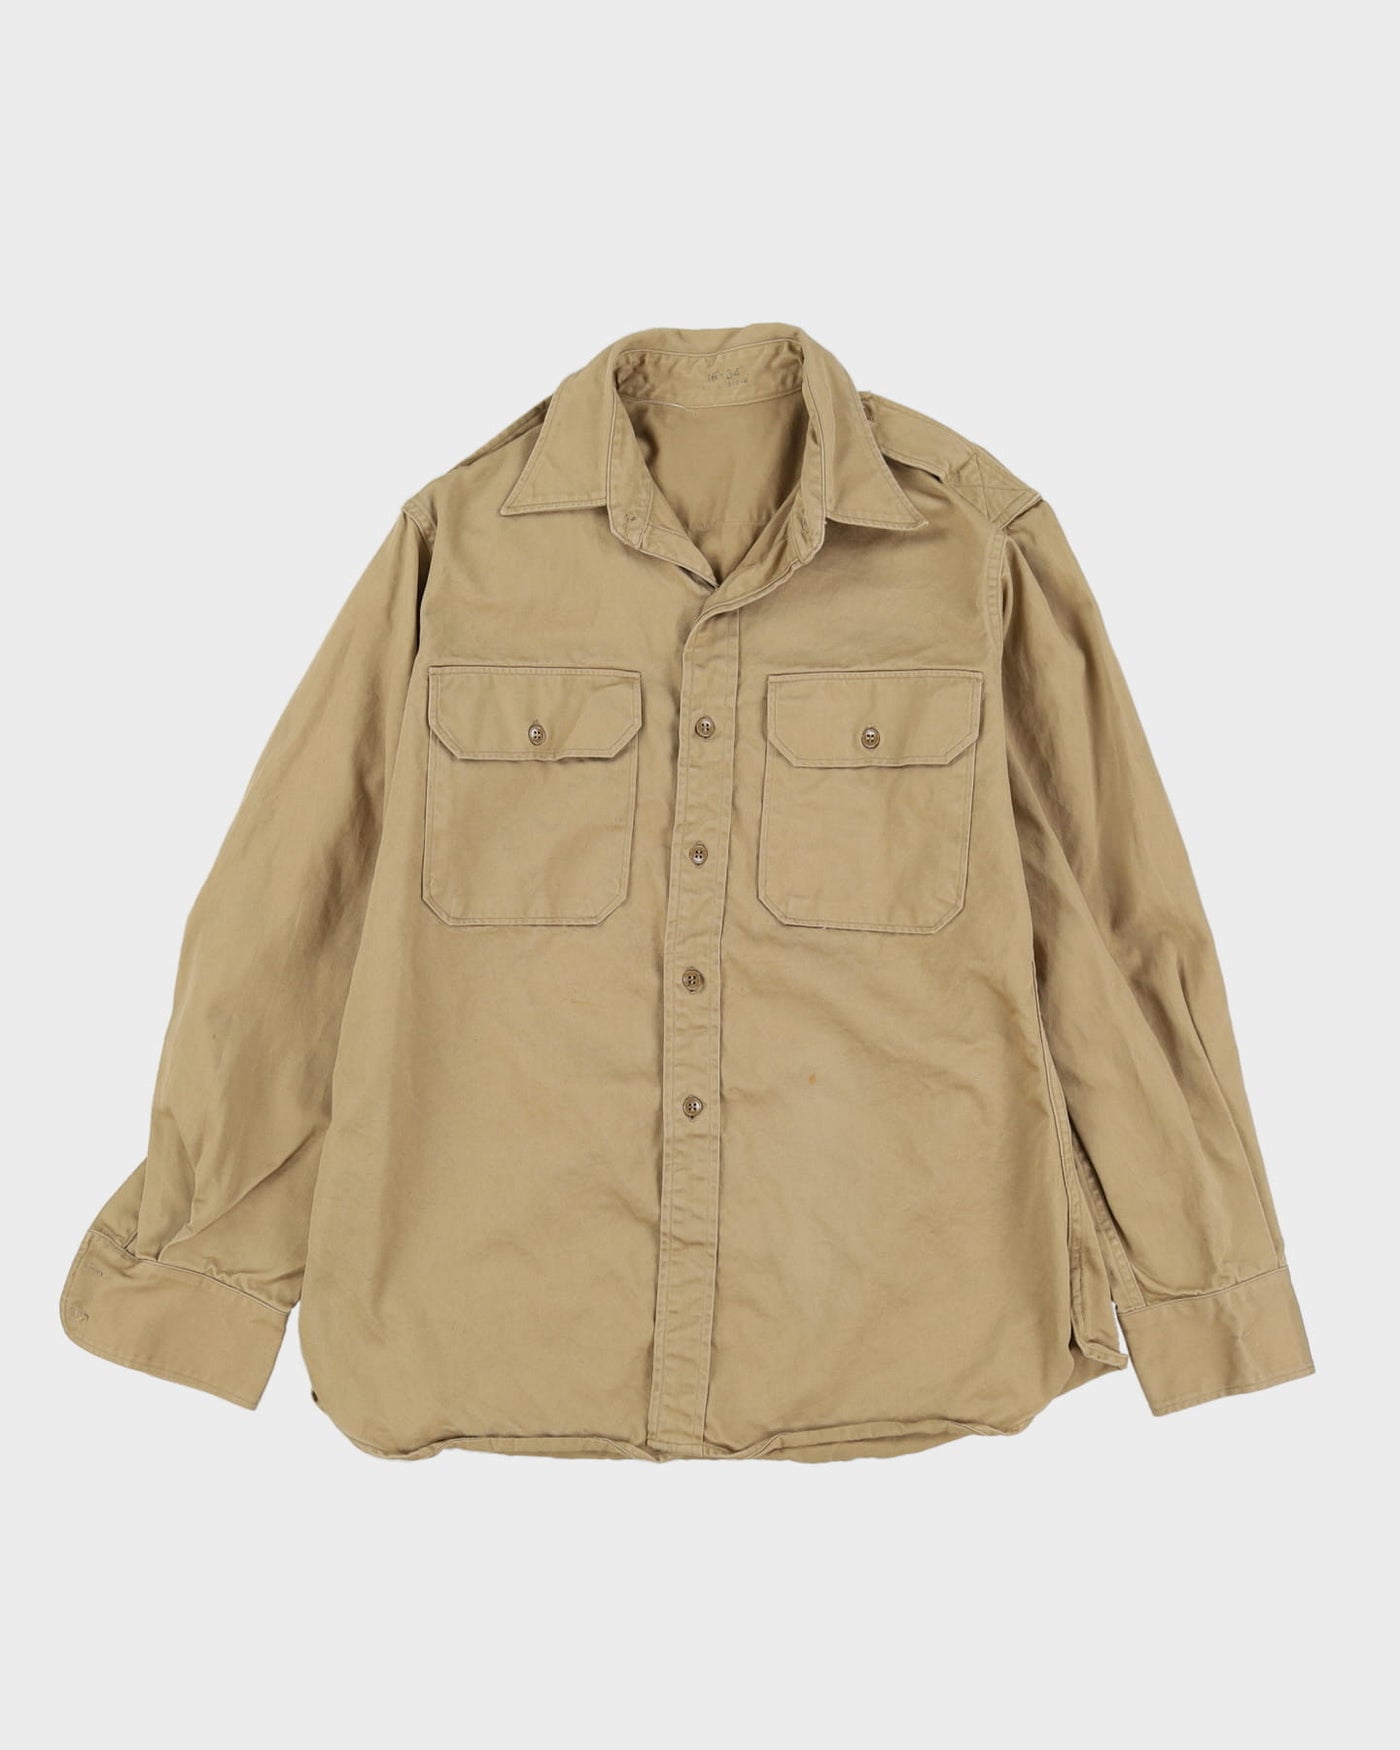 40s Vintage US Army Khaki Cotton Class B Dress Shirt - Medium